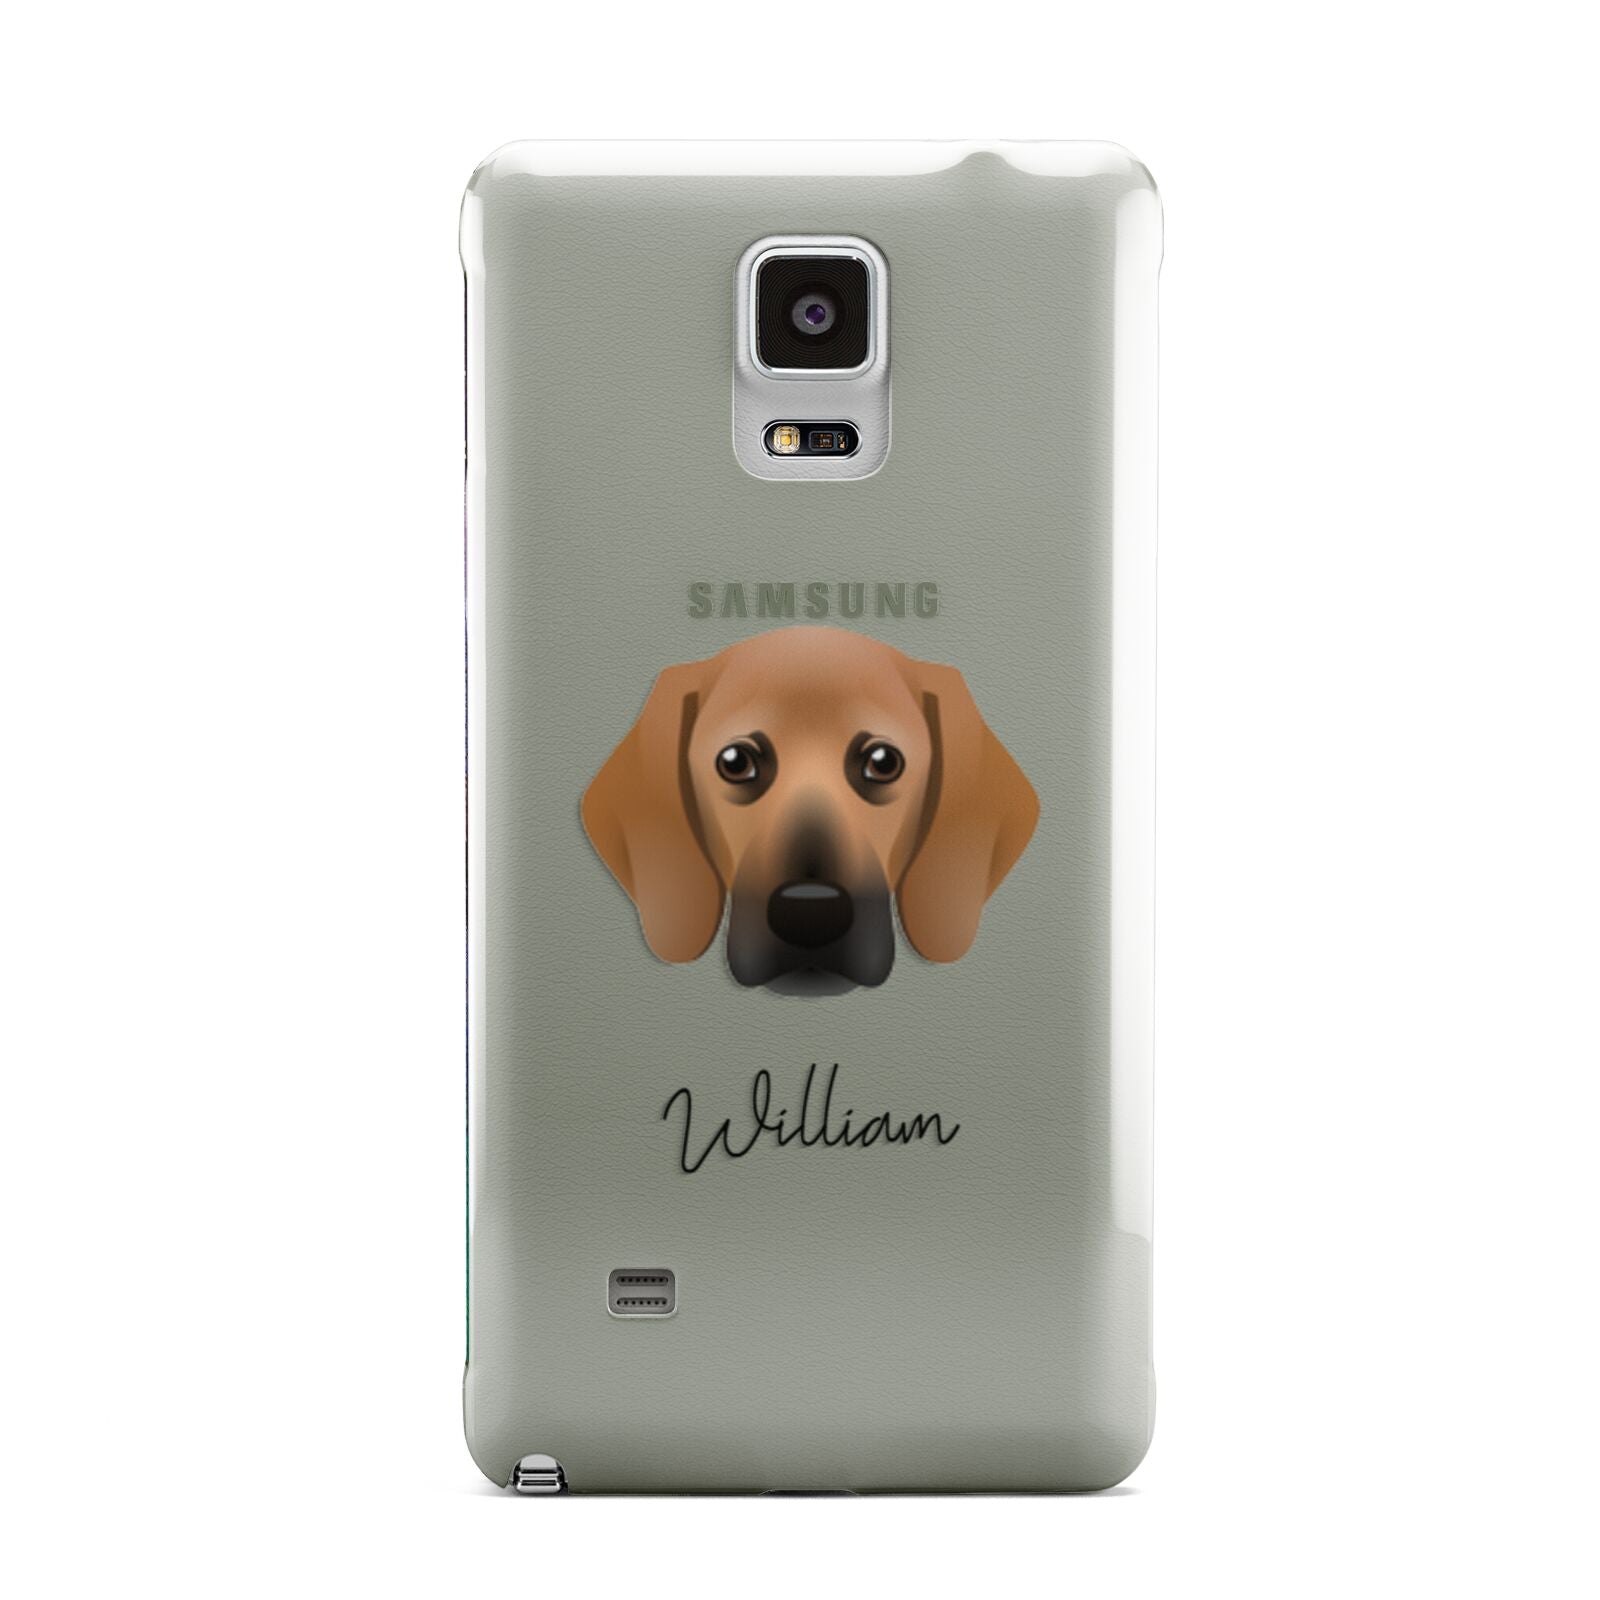 Bassugg Personalised Samsung Galaxy Note 4 Case